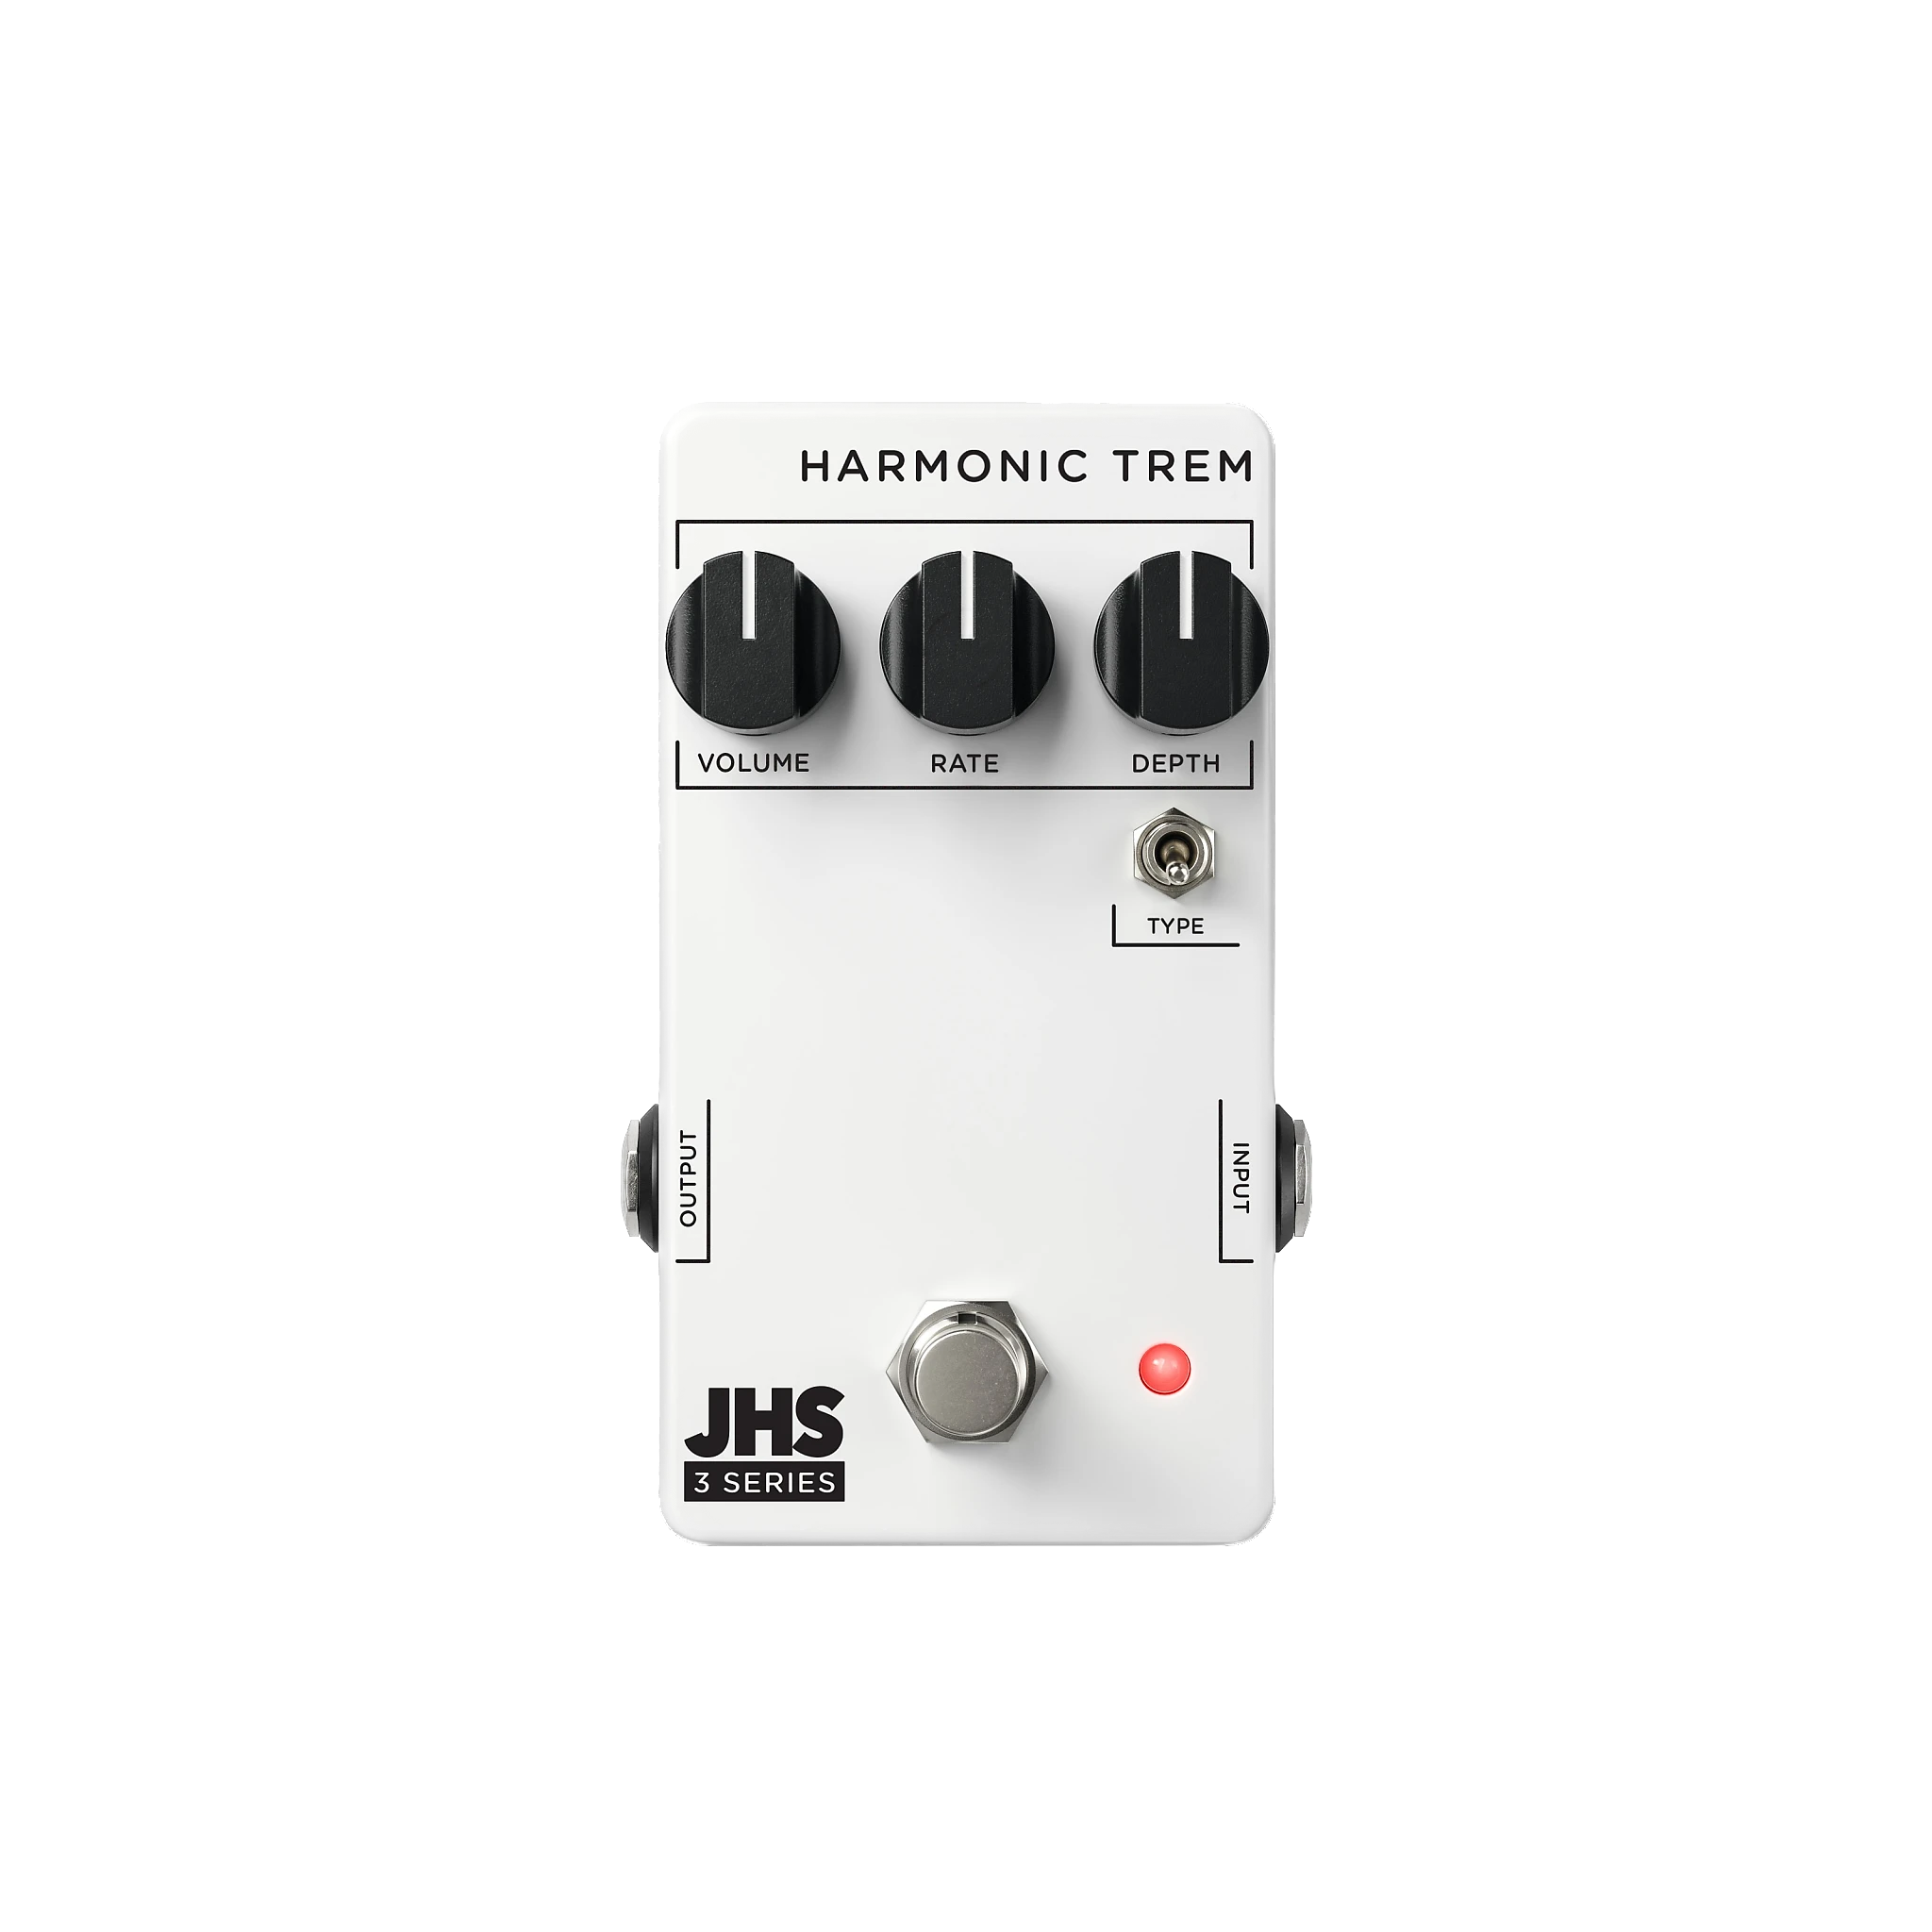 JHS 3 Series Harmonic Tremolo